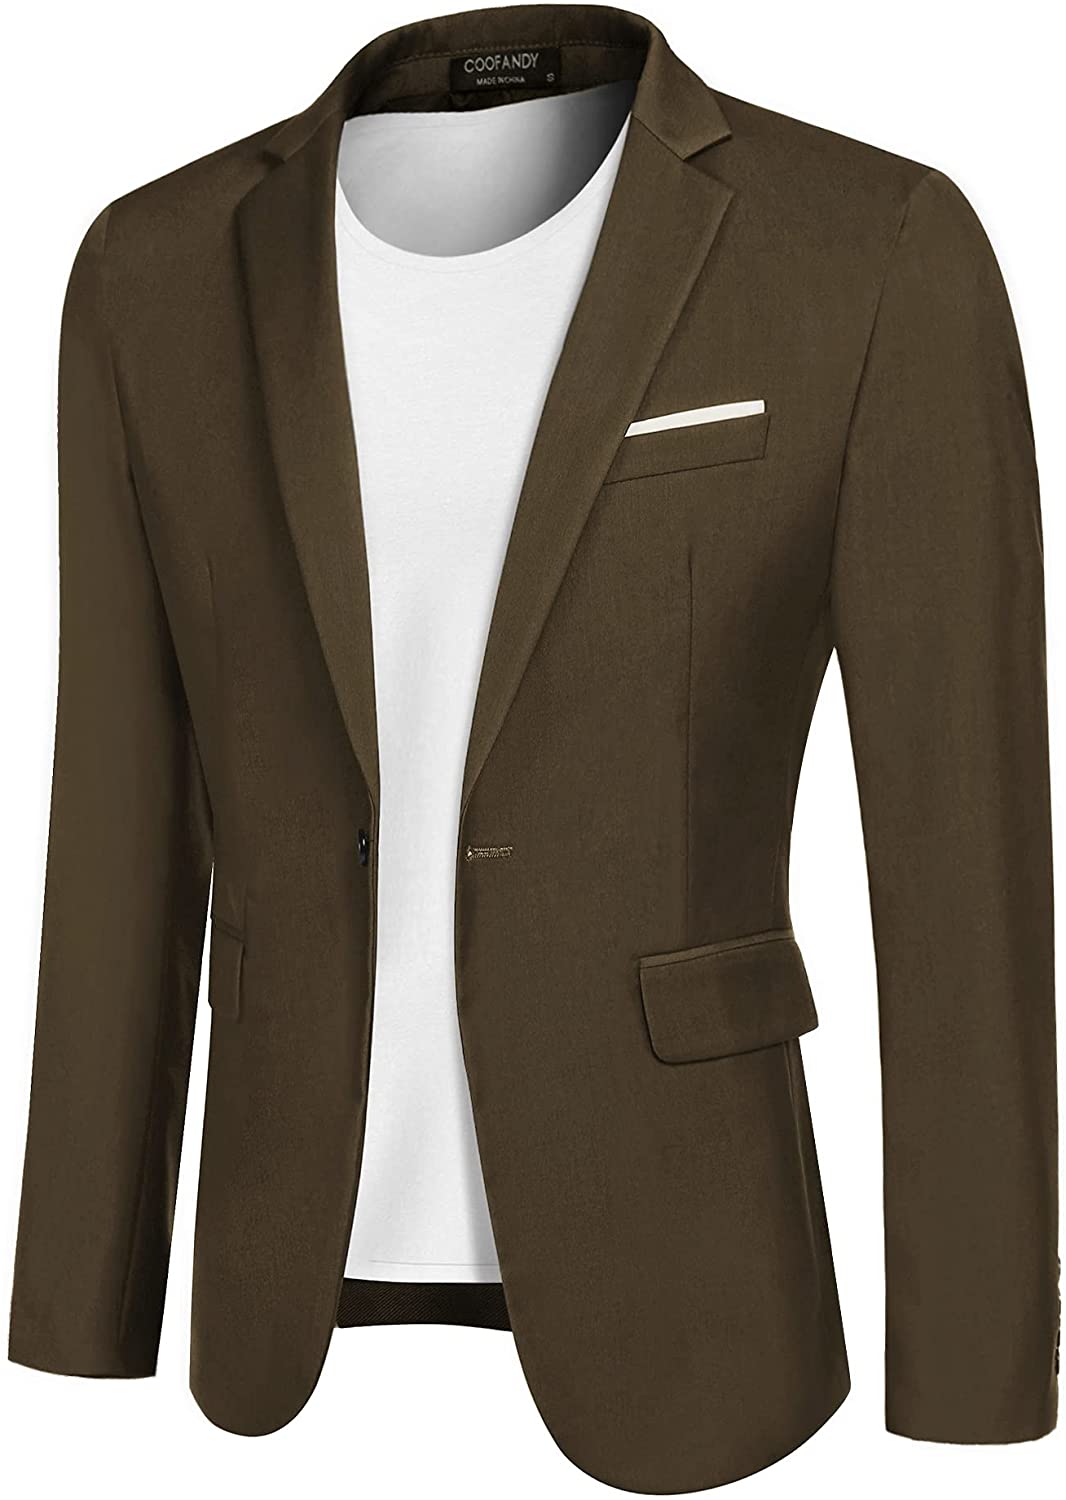 Men's Blazer One Button Slim Fit Lightweight Casual Sports Coat